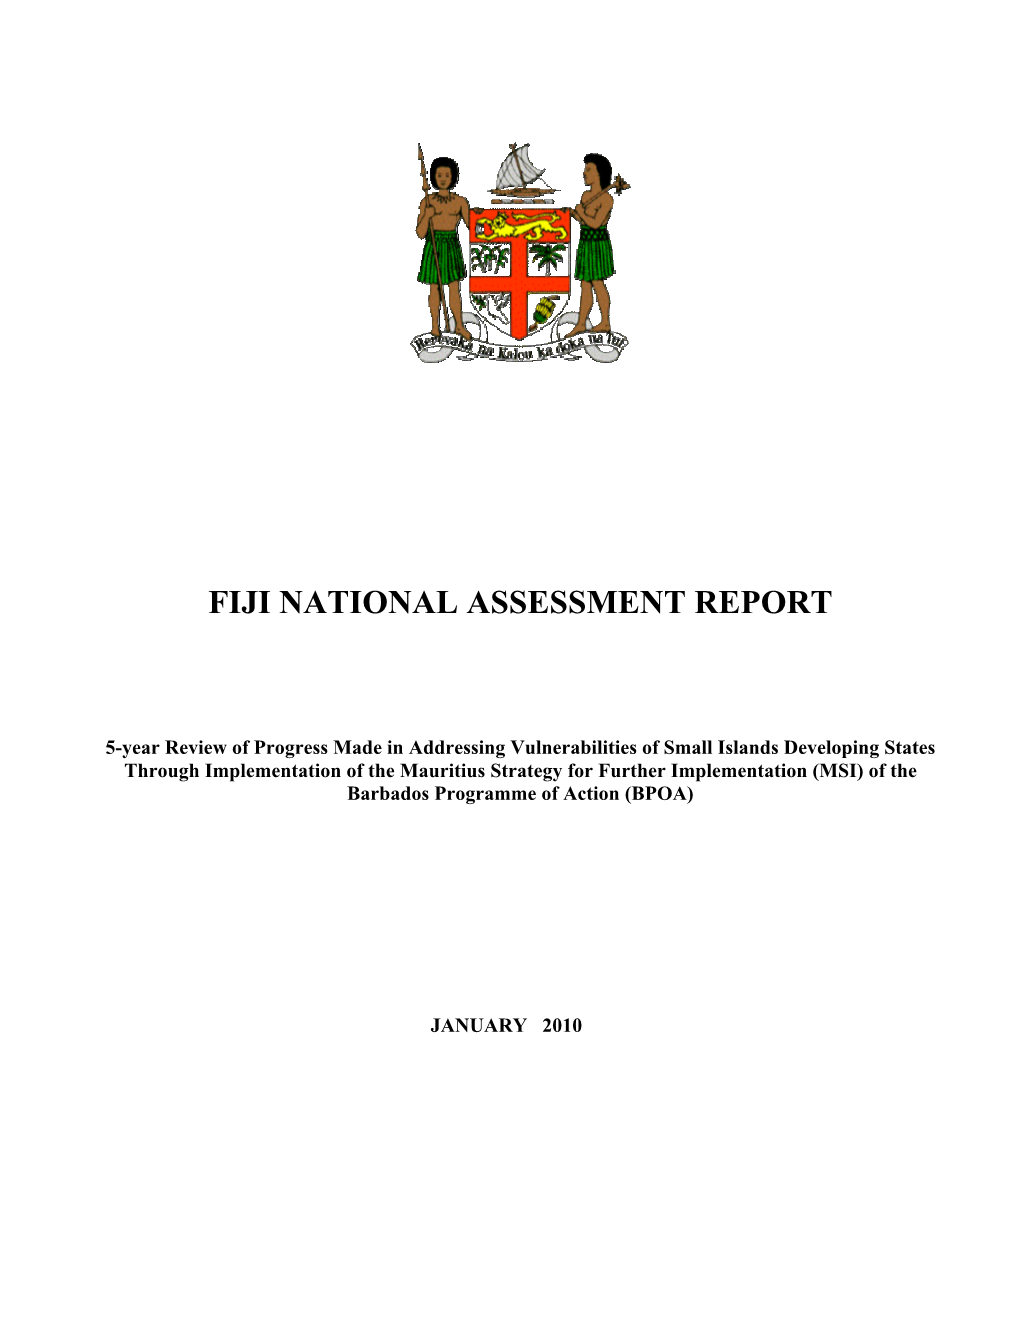 Fiji National Assessment Report